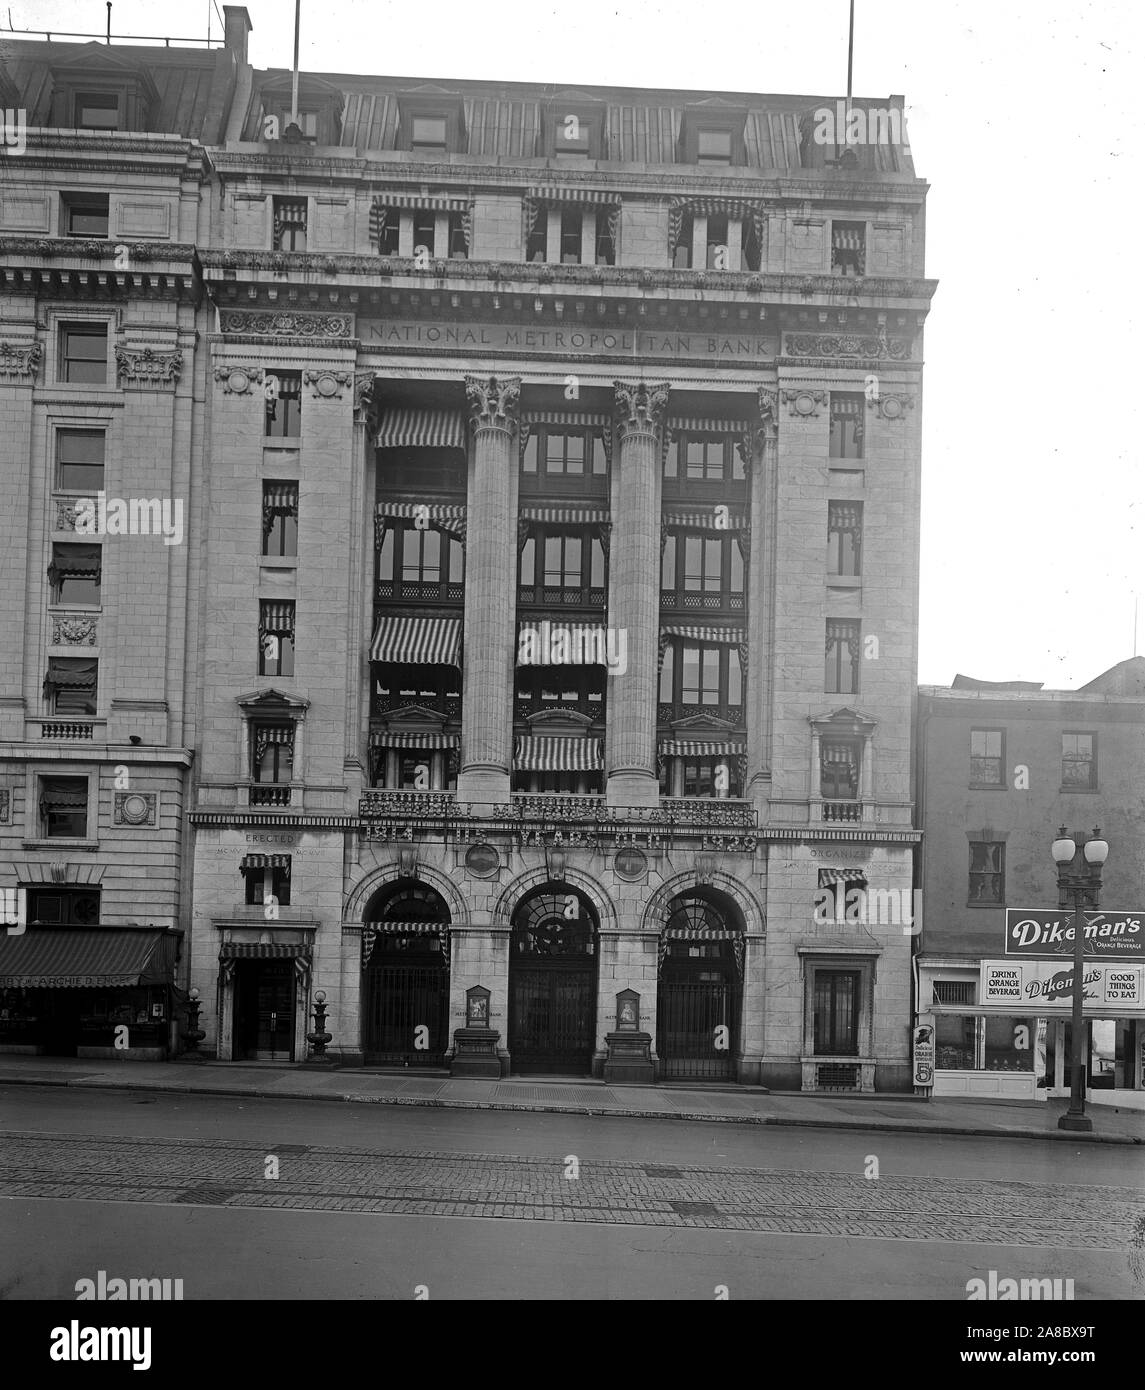 Metropoliatan Bank ca. early 1900s Stock Photo